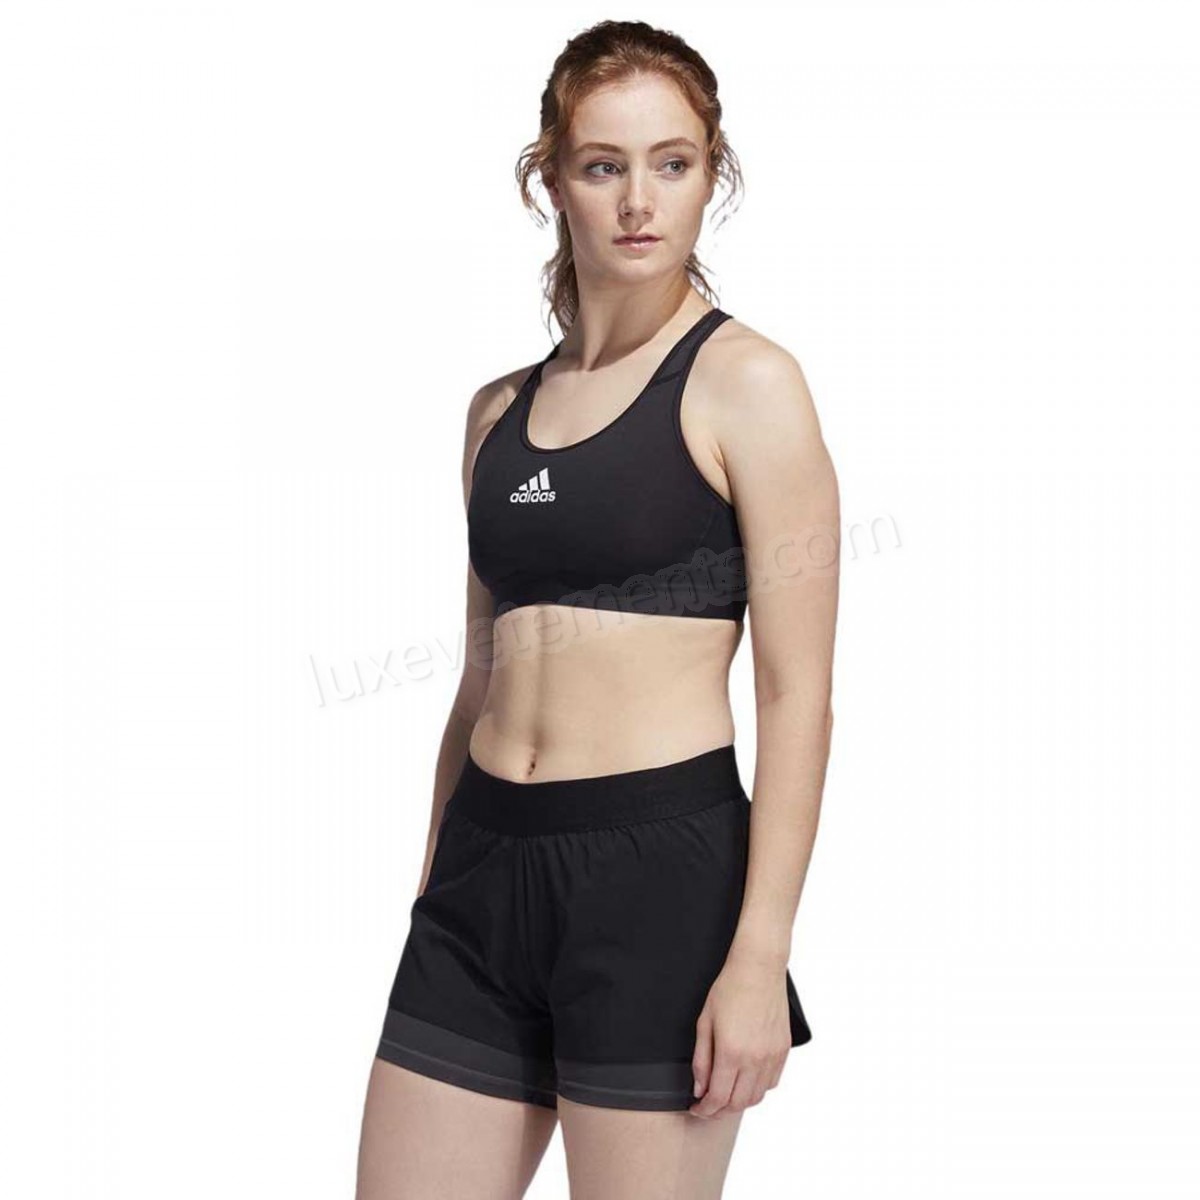 Adidas-Fitness femme ADIDAS Brassière adidas Don't Rest Alphaskin Vente en ligne - -26